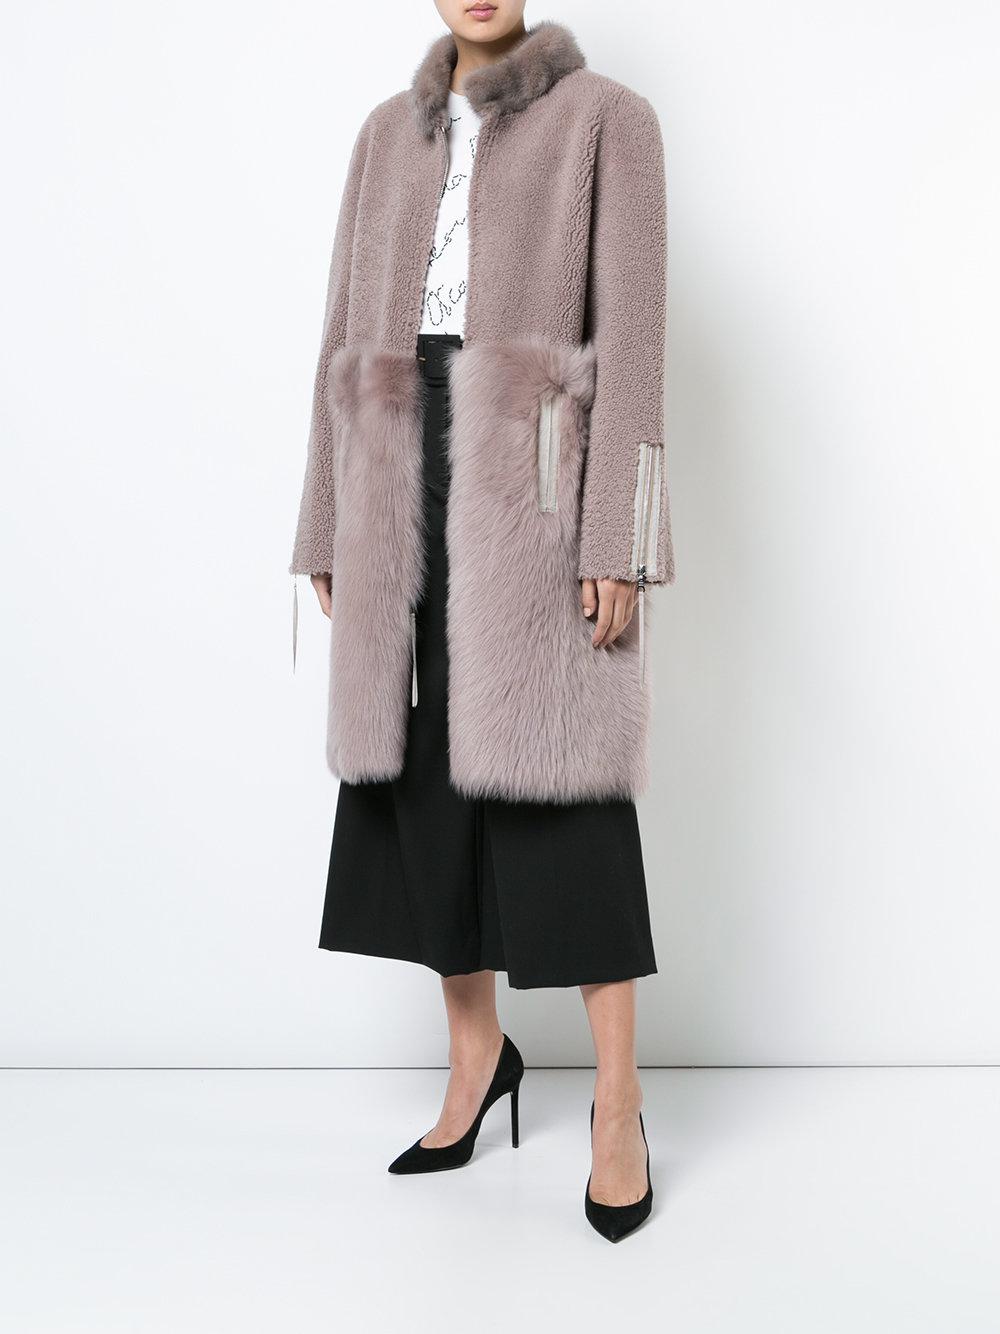 Lyst - Oscar De La Renta Zipped Fur Coat in Pink